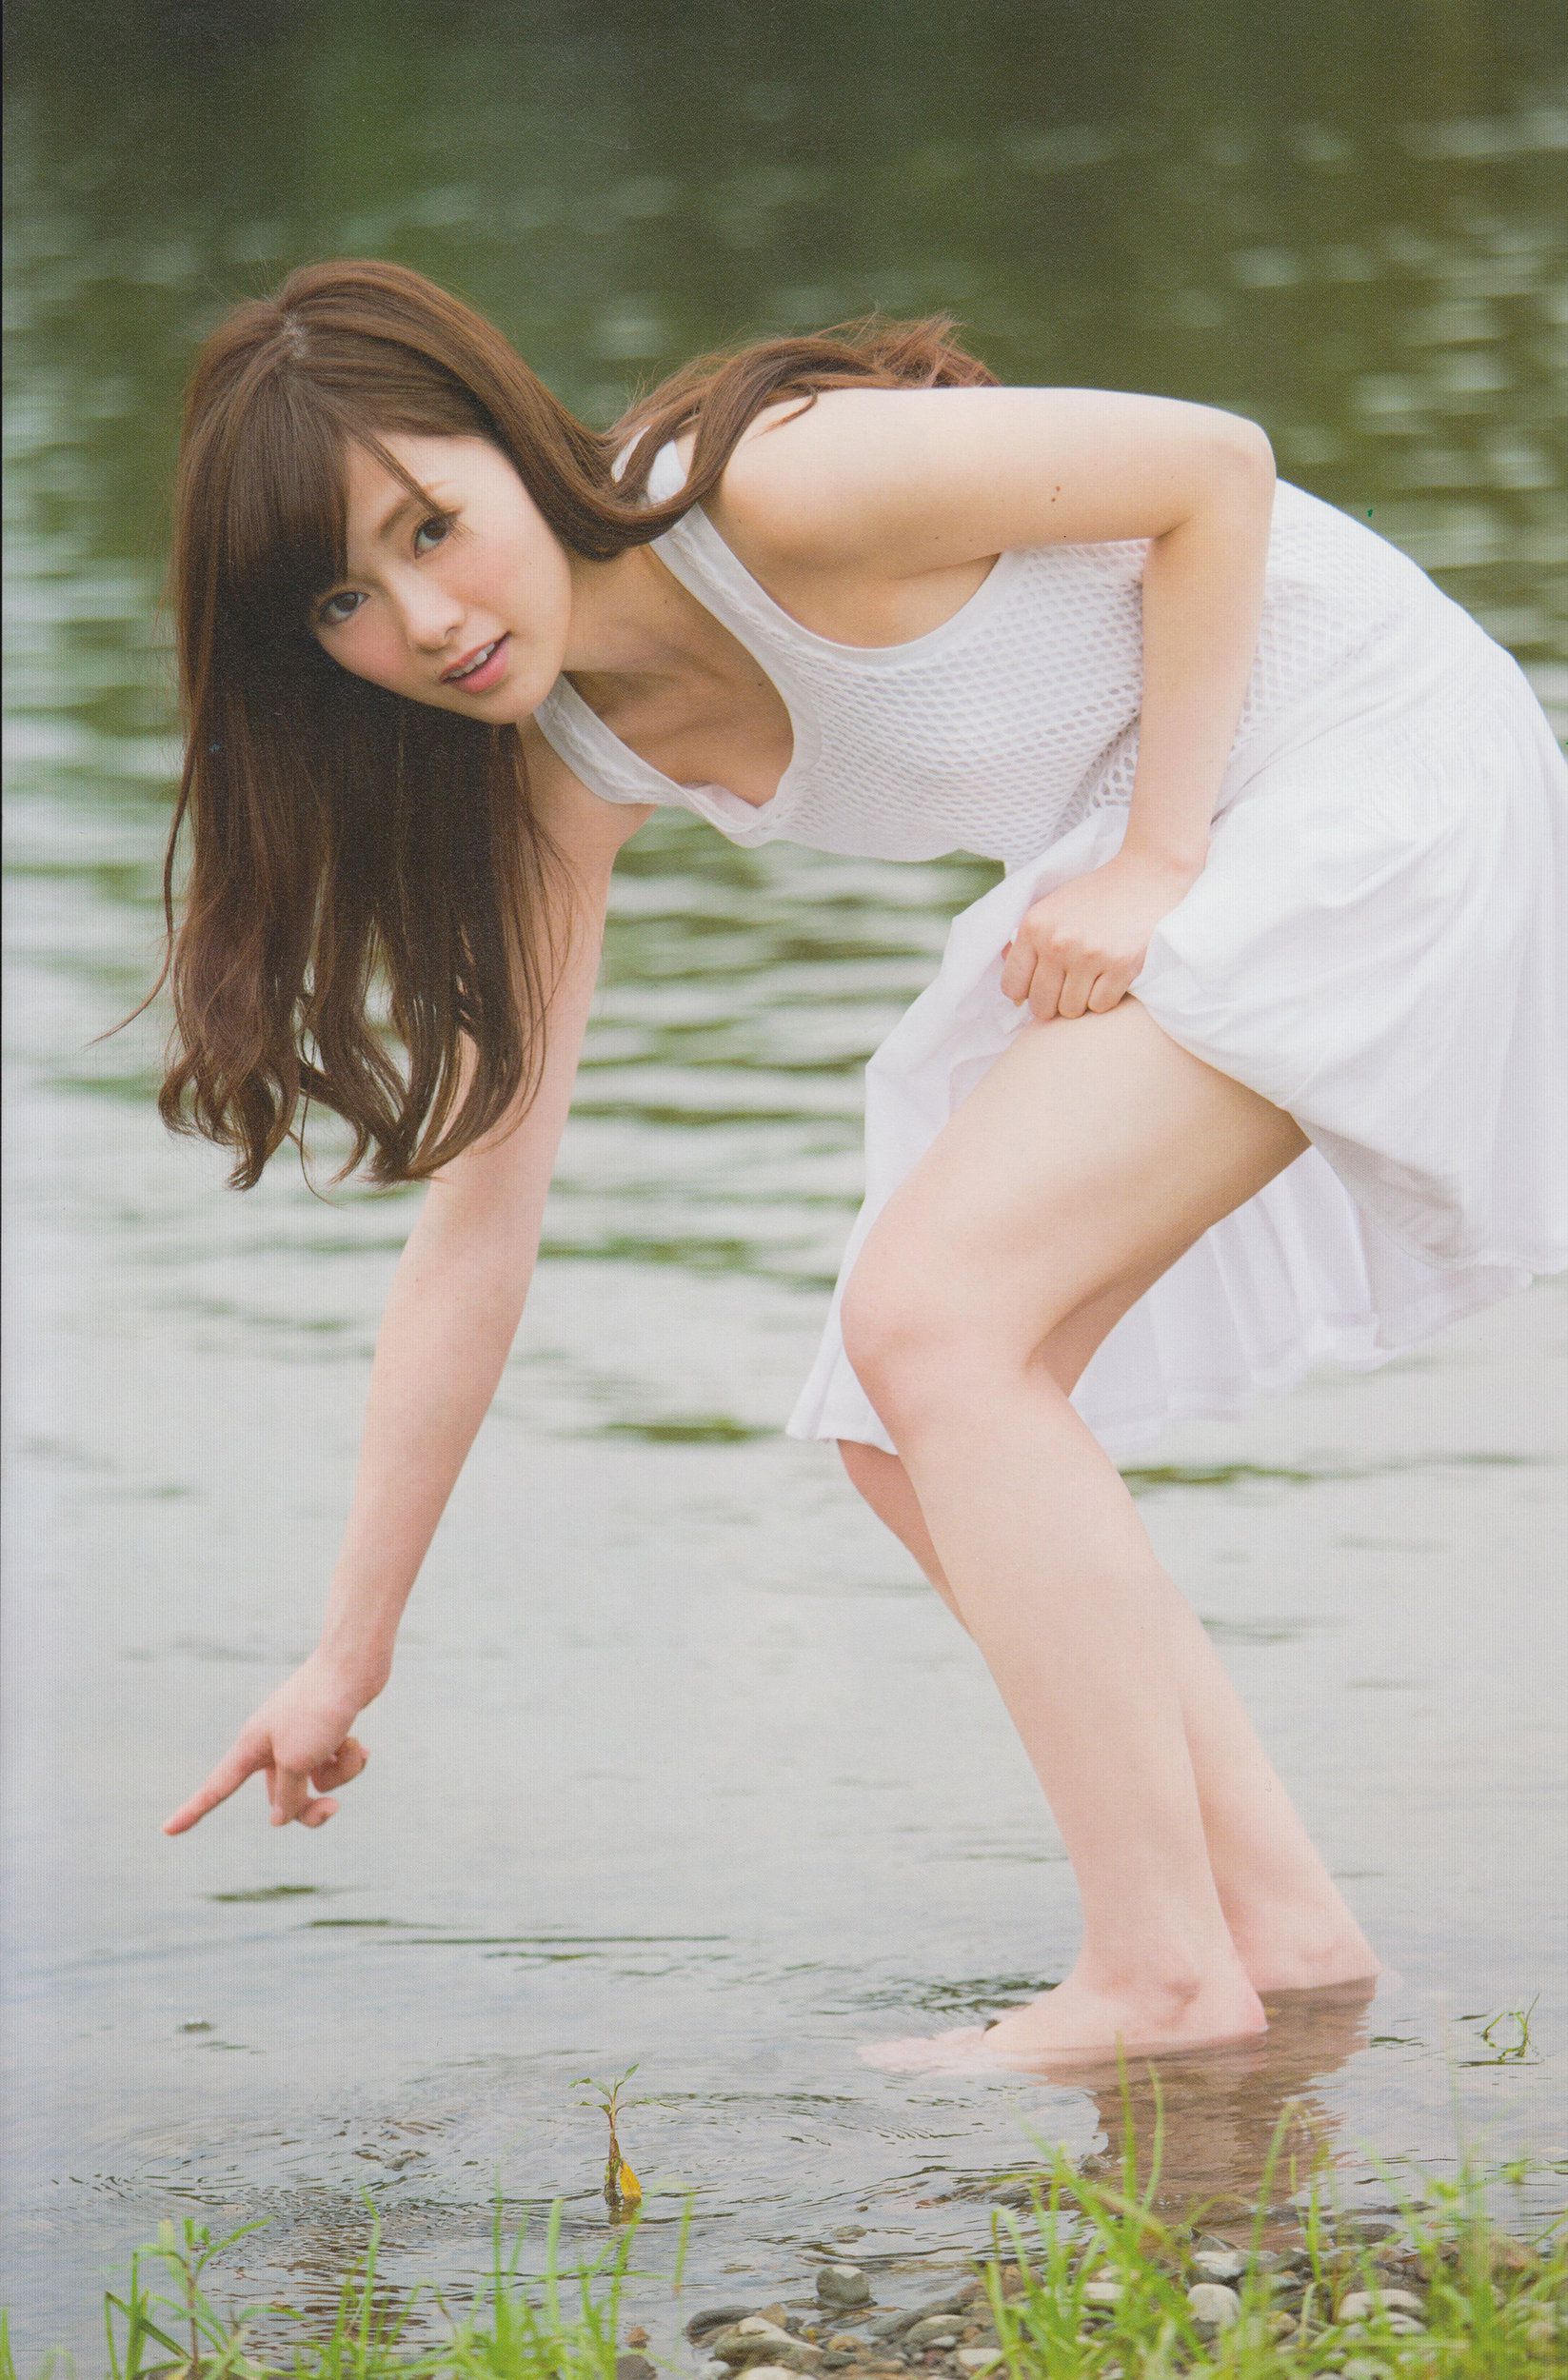 Mai Shiraishi in her first photobook "Innocent Adult"